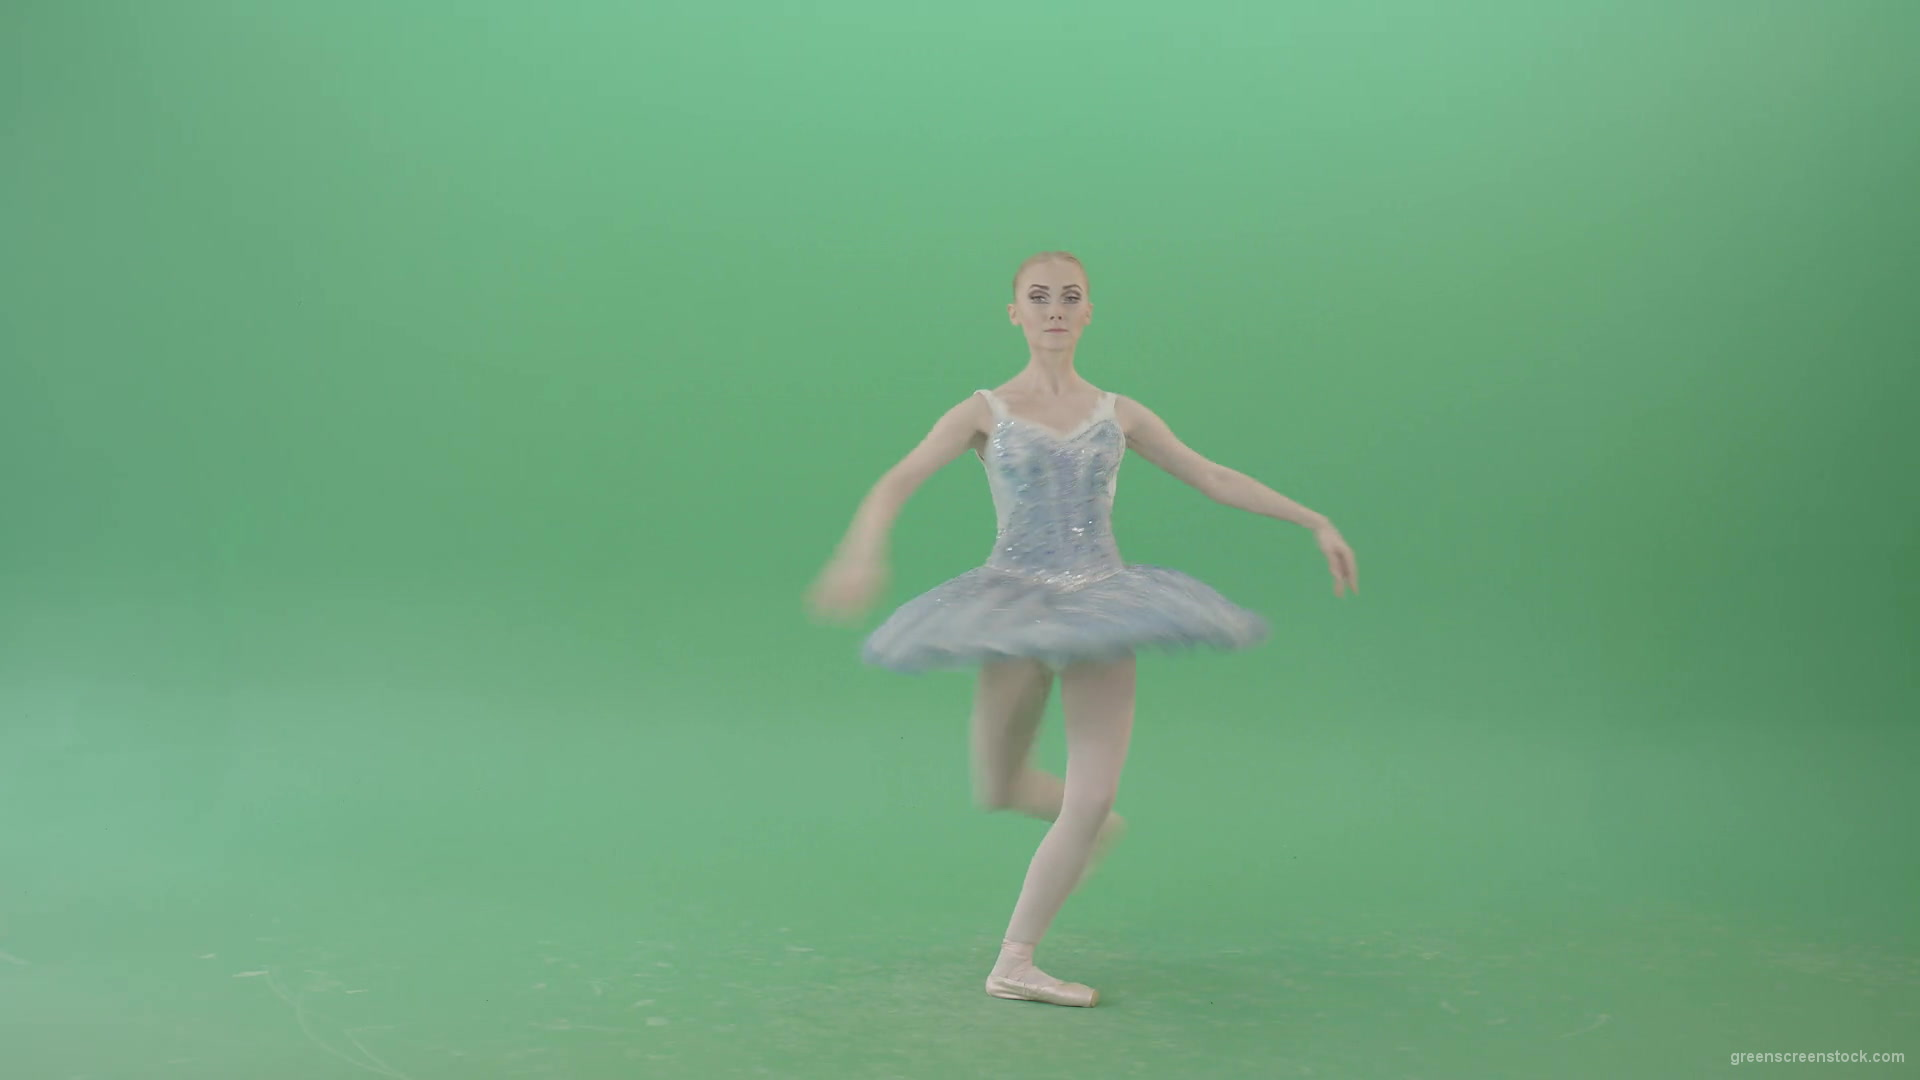 Beauty-blonde-ballerin-ballet-dancing-girl-in-blue-dress-spinning-over-green-screen-4K-Video-Footag-30fps-1920_007 Green Screen Stock